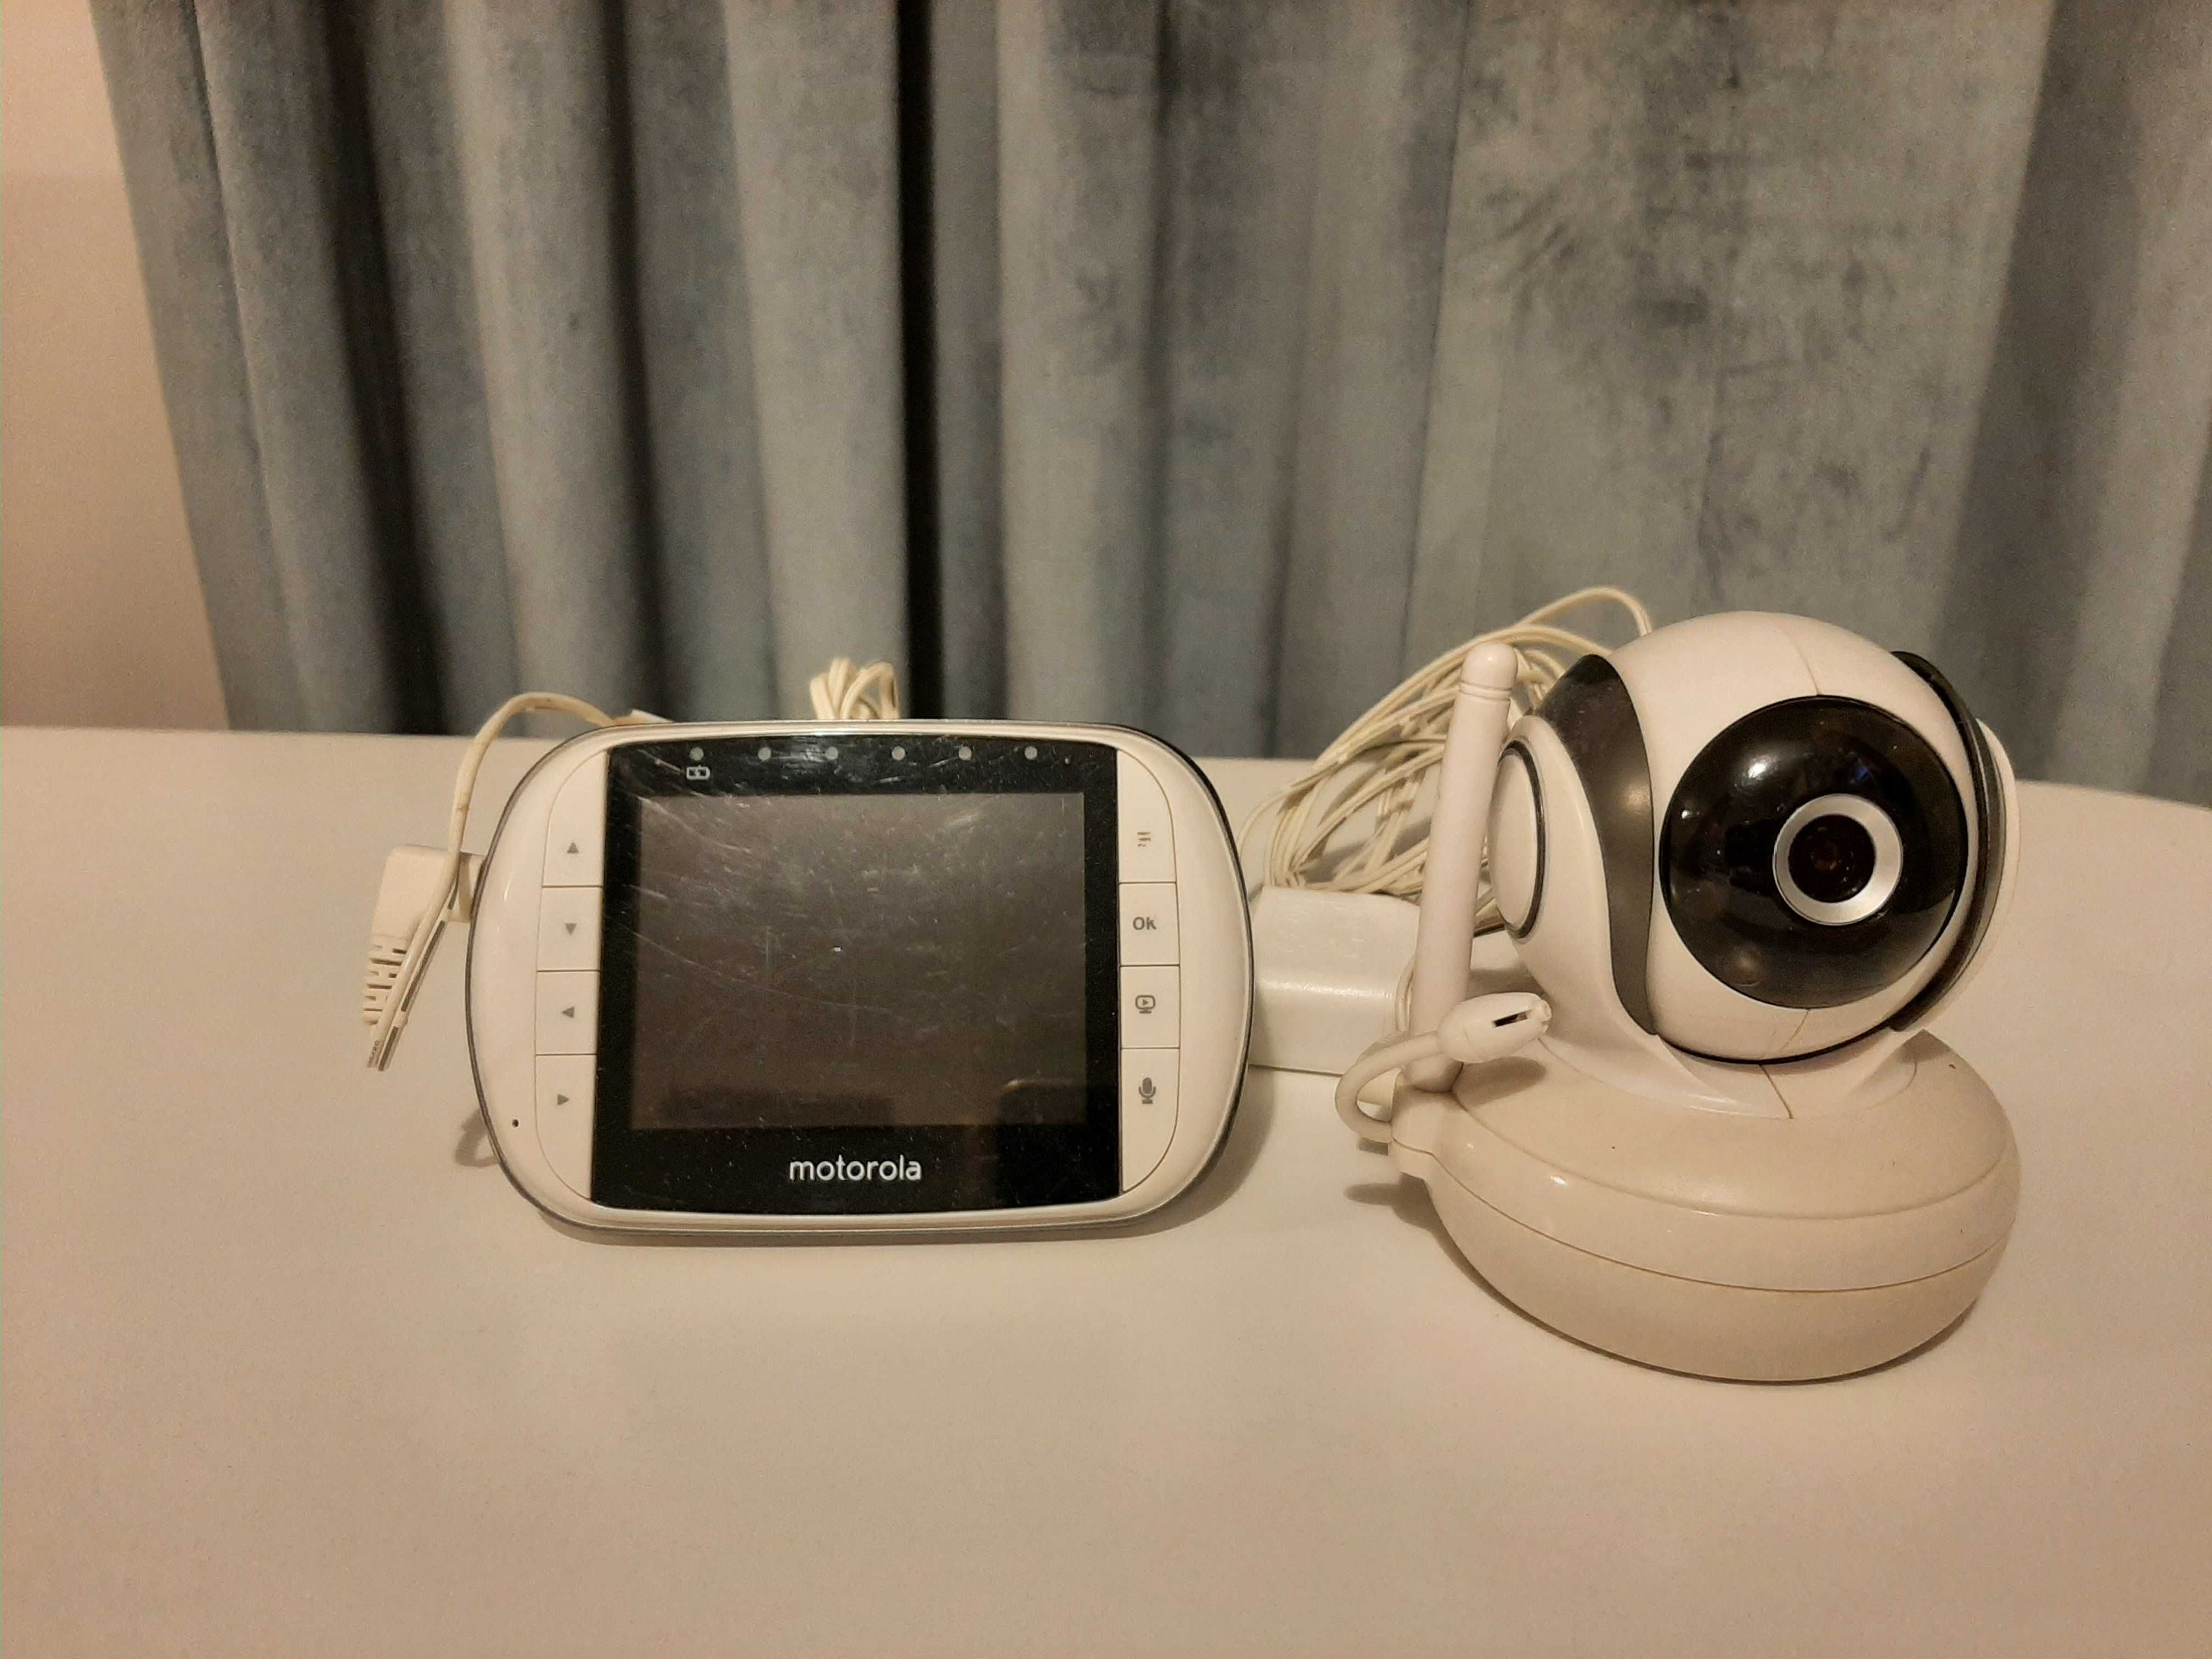 Sistem Motorola pentru monitorizare bebe